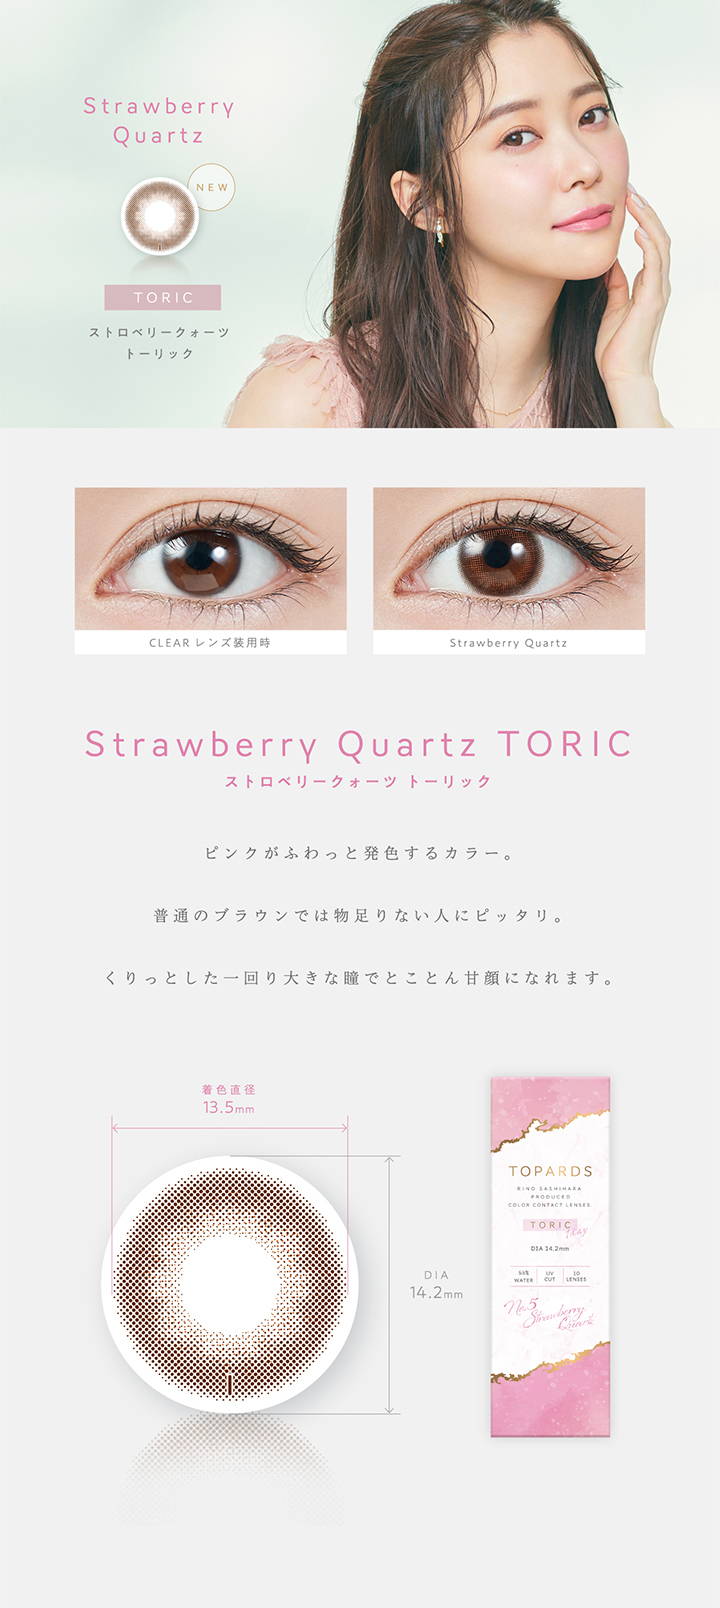 Strawberry Quartz TORIC(ストロベリークォーツトーリック),新色,ピンクがふわっと発色するカラー。普通のブラウンでは物足りない人にピッタリ。くりっとした一回り大きな瞳でとことん甘顔になれます。,着色直径13.5mm,DIA14.2mm|TOPARDS TORIC(トパーズトーリック)コンタクトレンズ